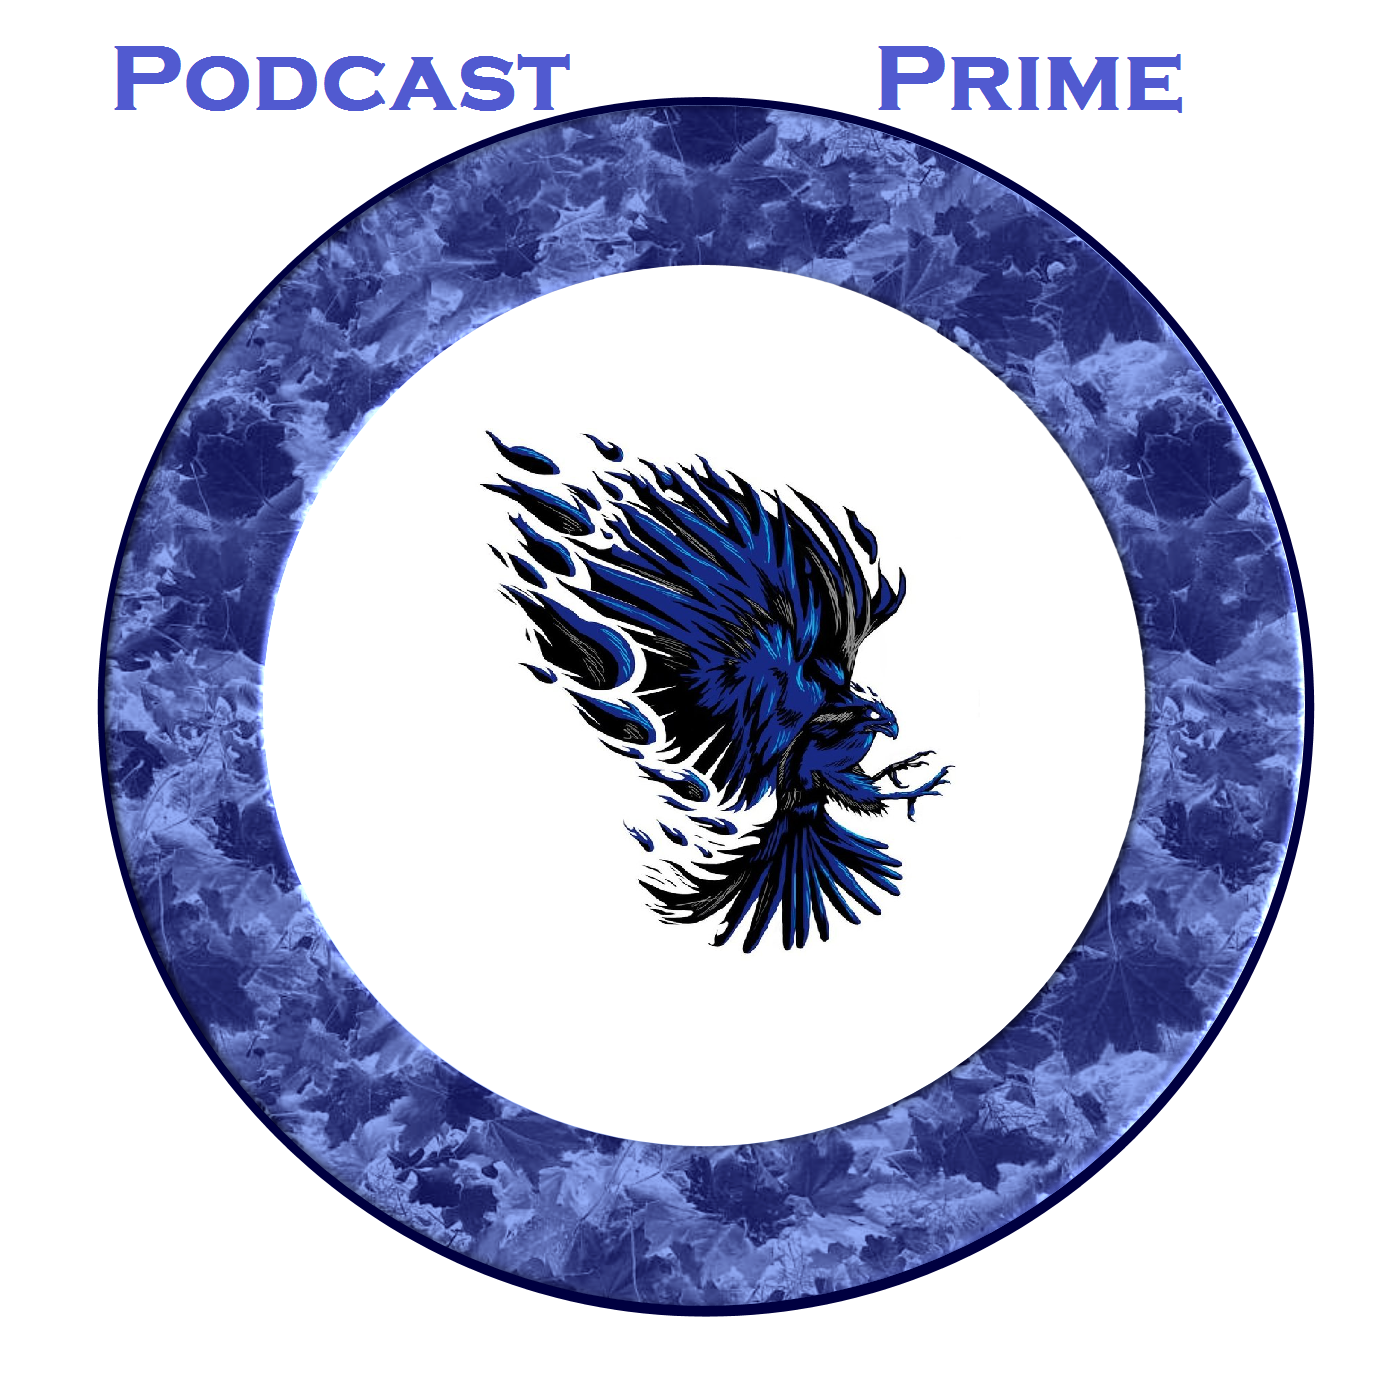 Podcast Prime Episode 1